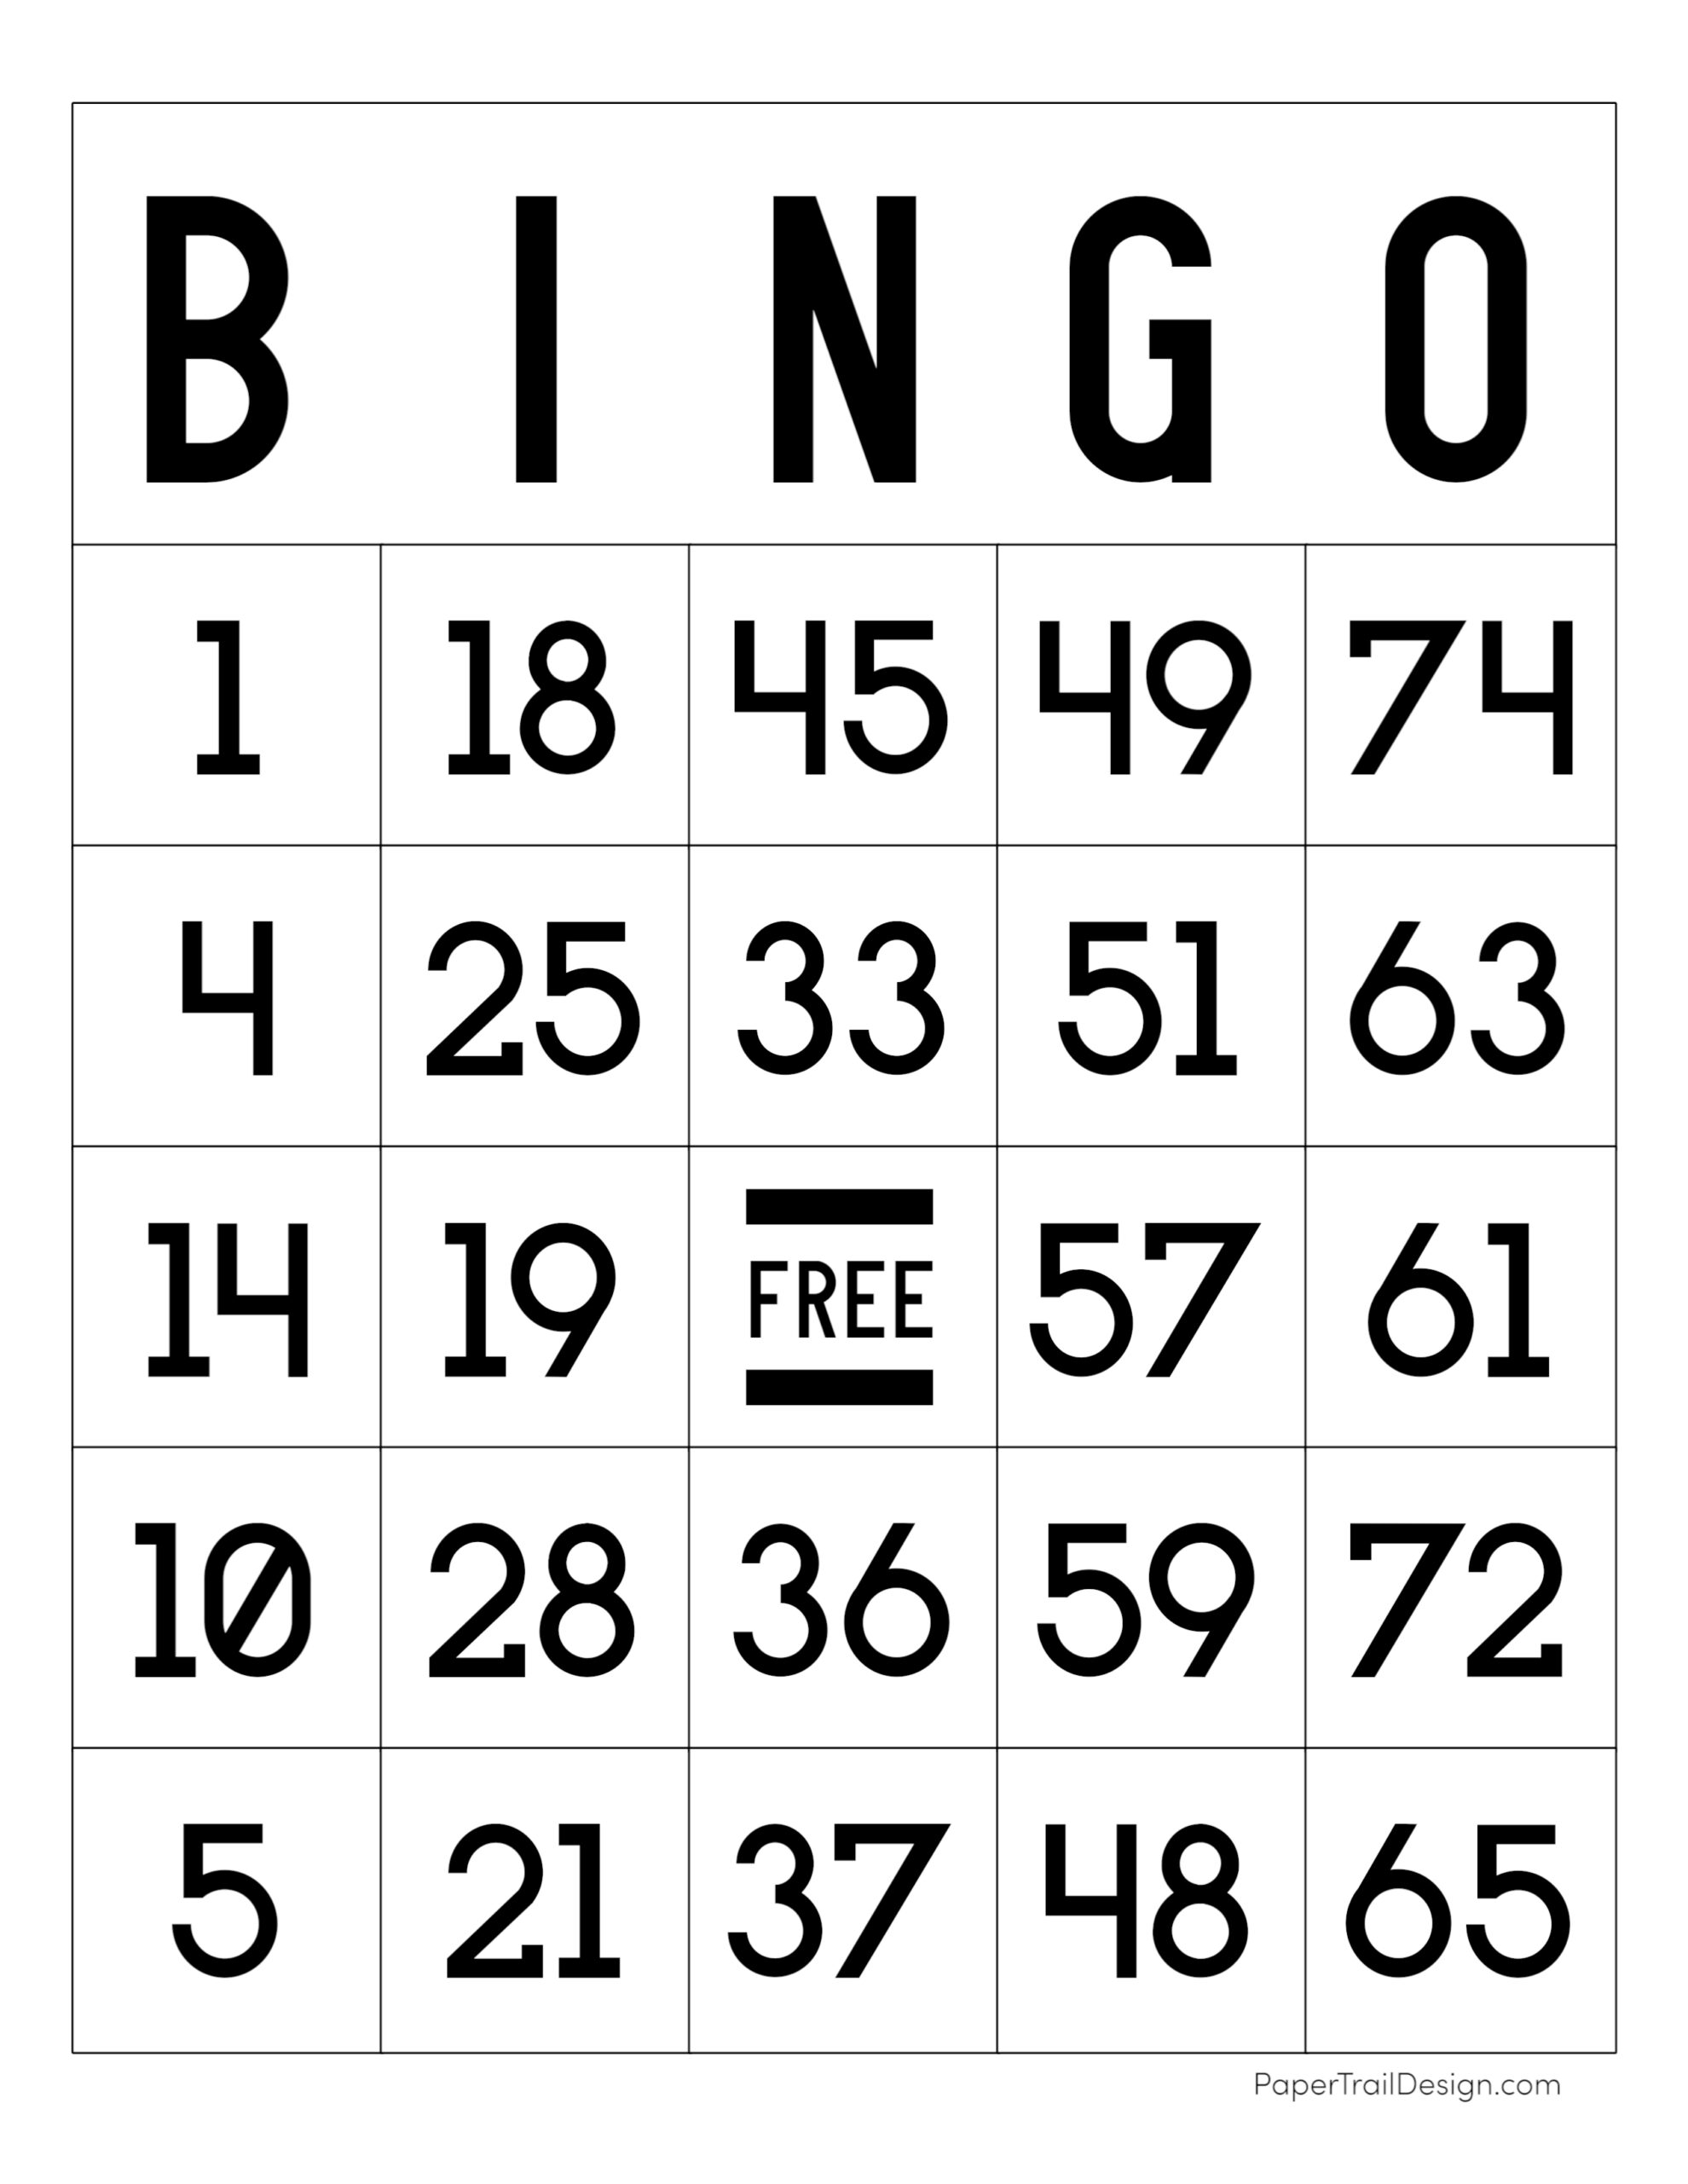 bingo-calling-cards-printable-printable-word-searches